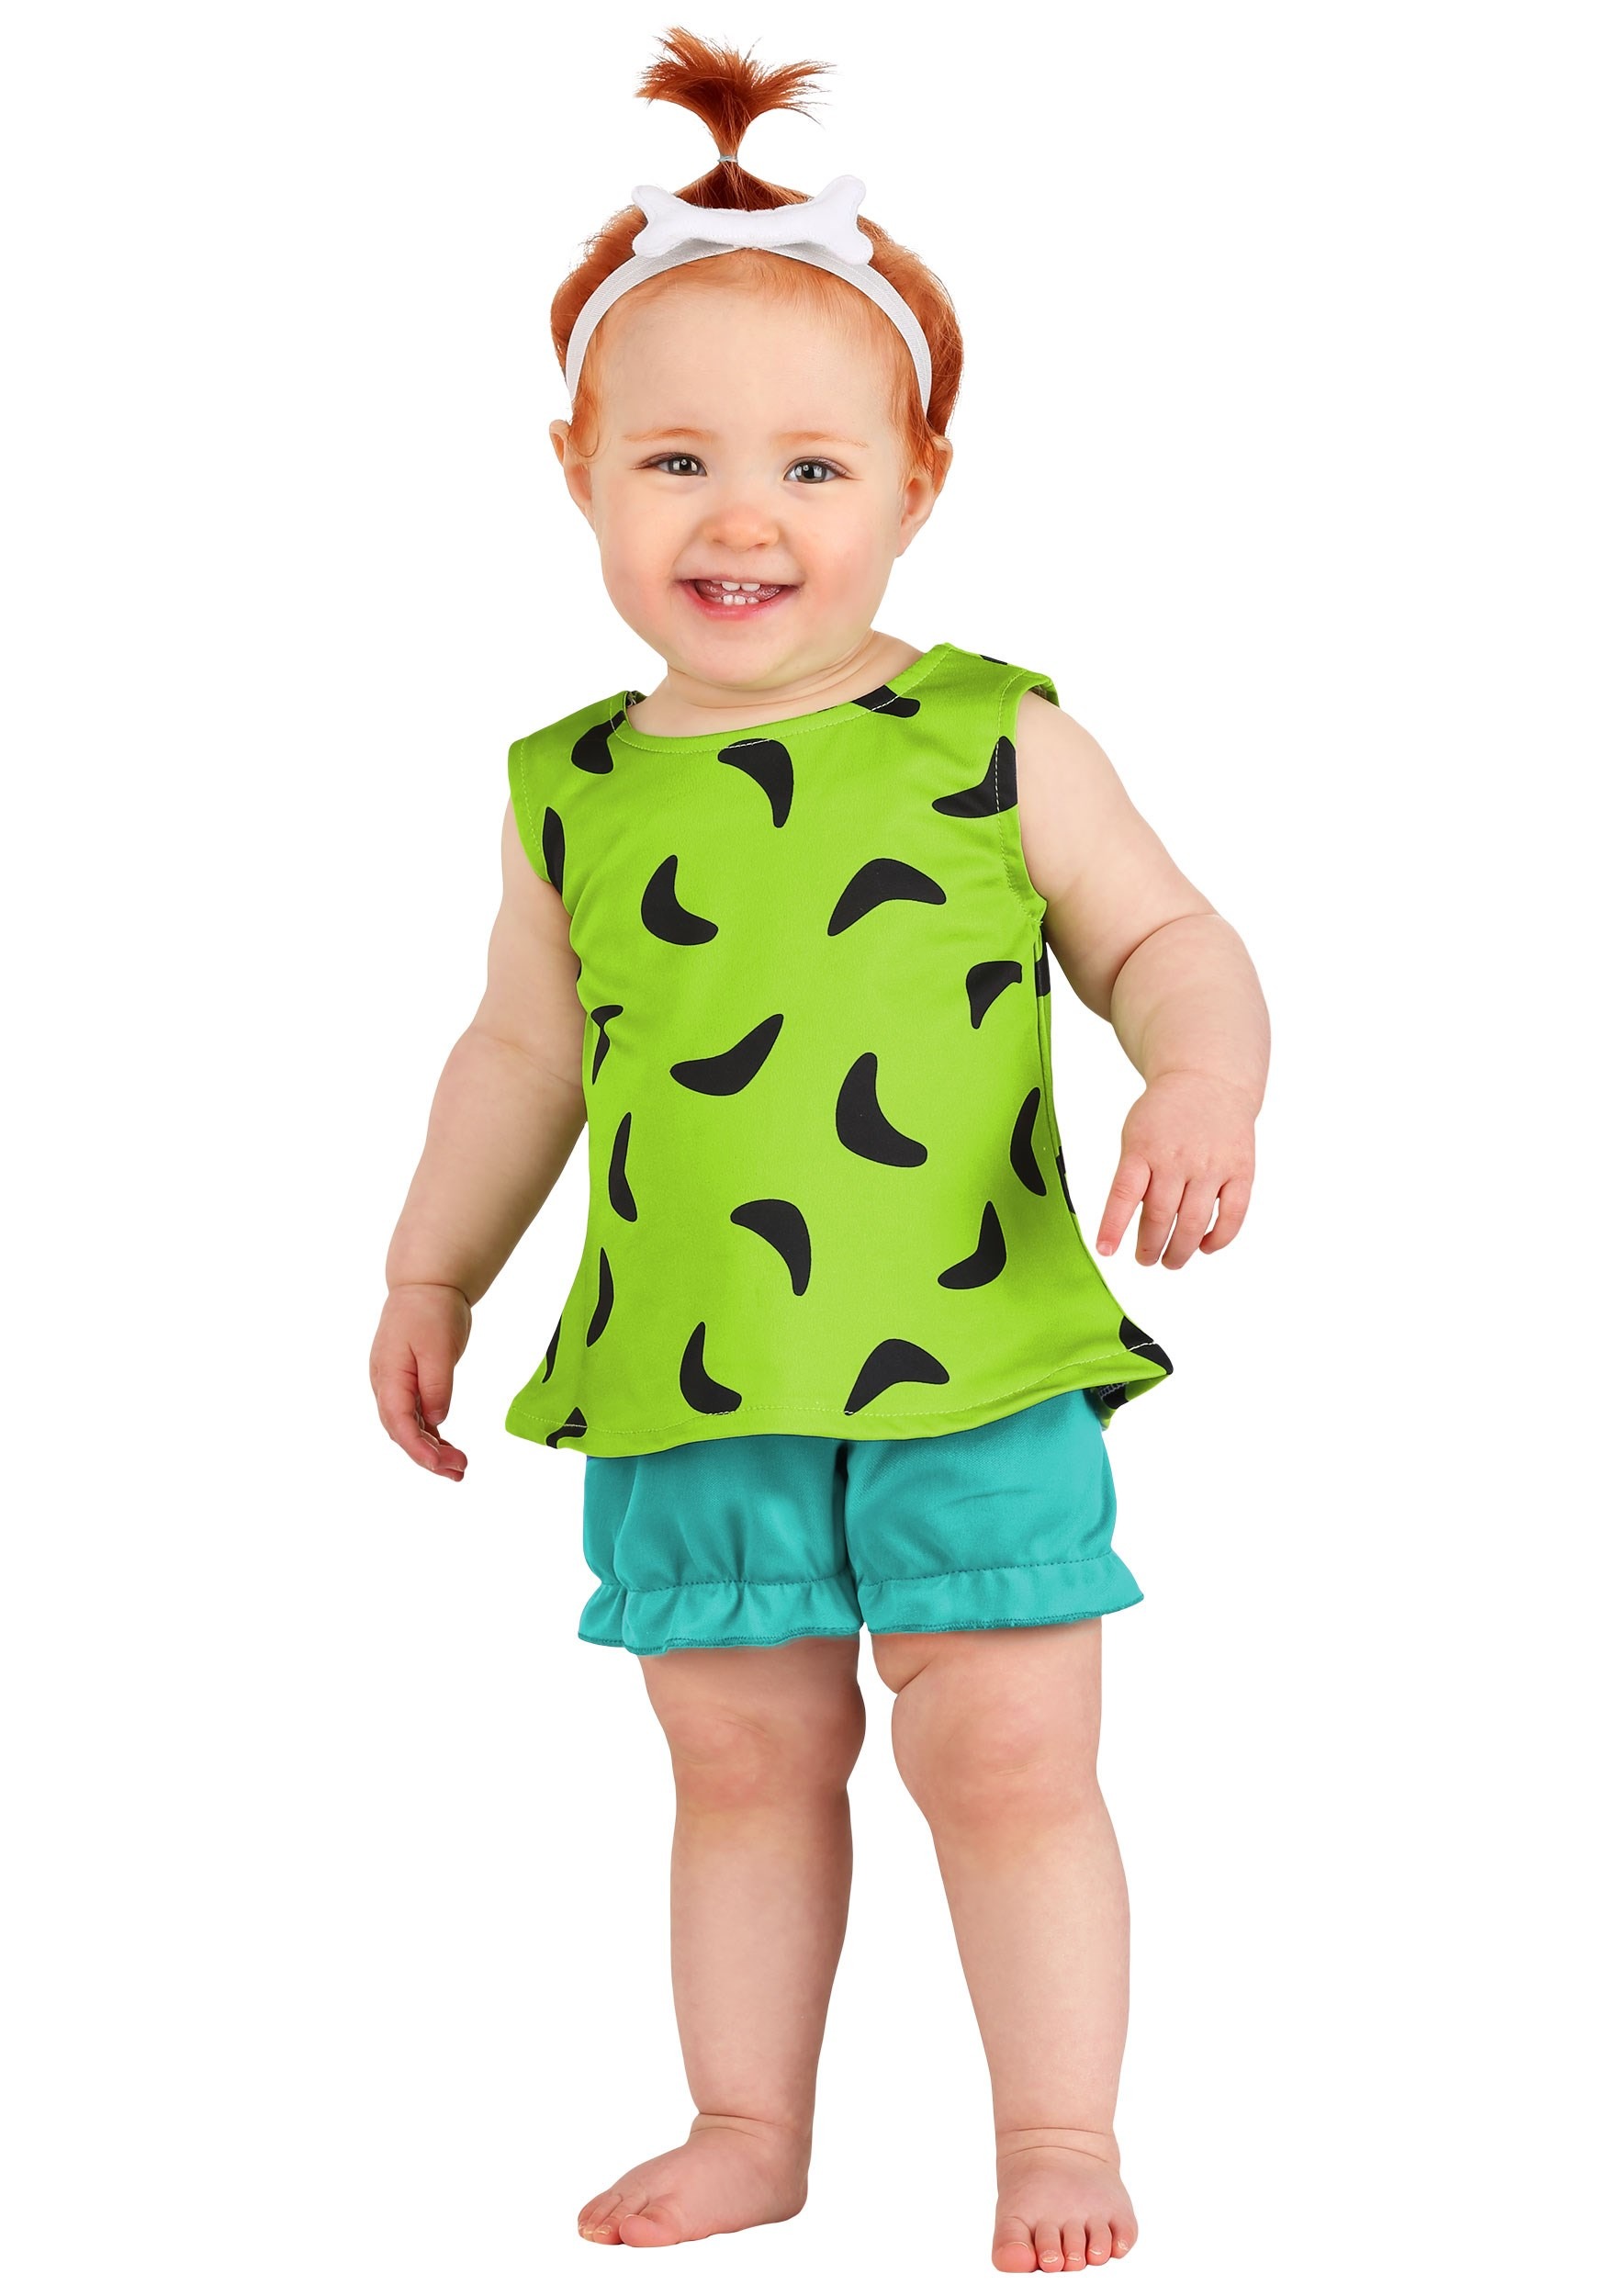 Photos - Fancy Dress Classic FUN Costumes Infant  Flintstones Pebbles Costume Green/Black FU 